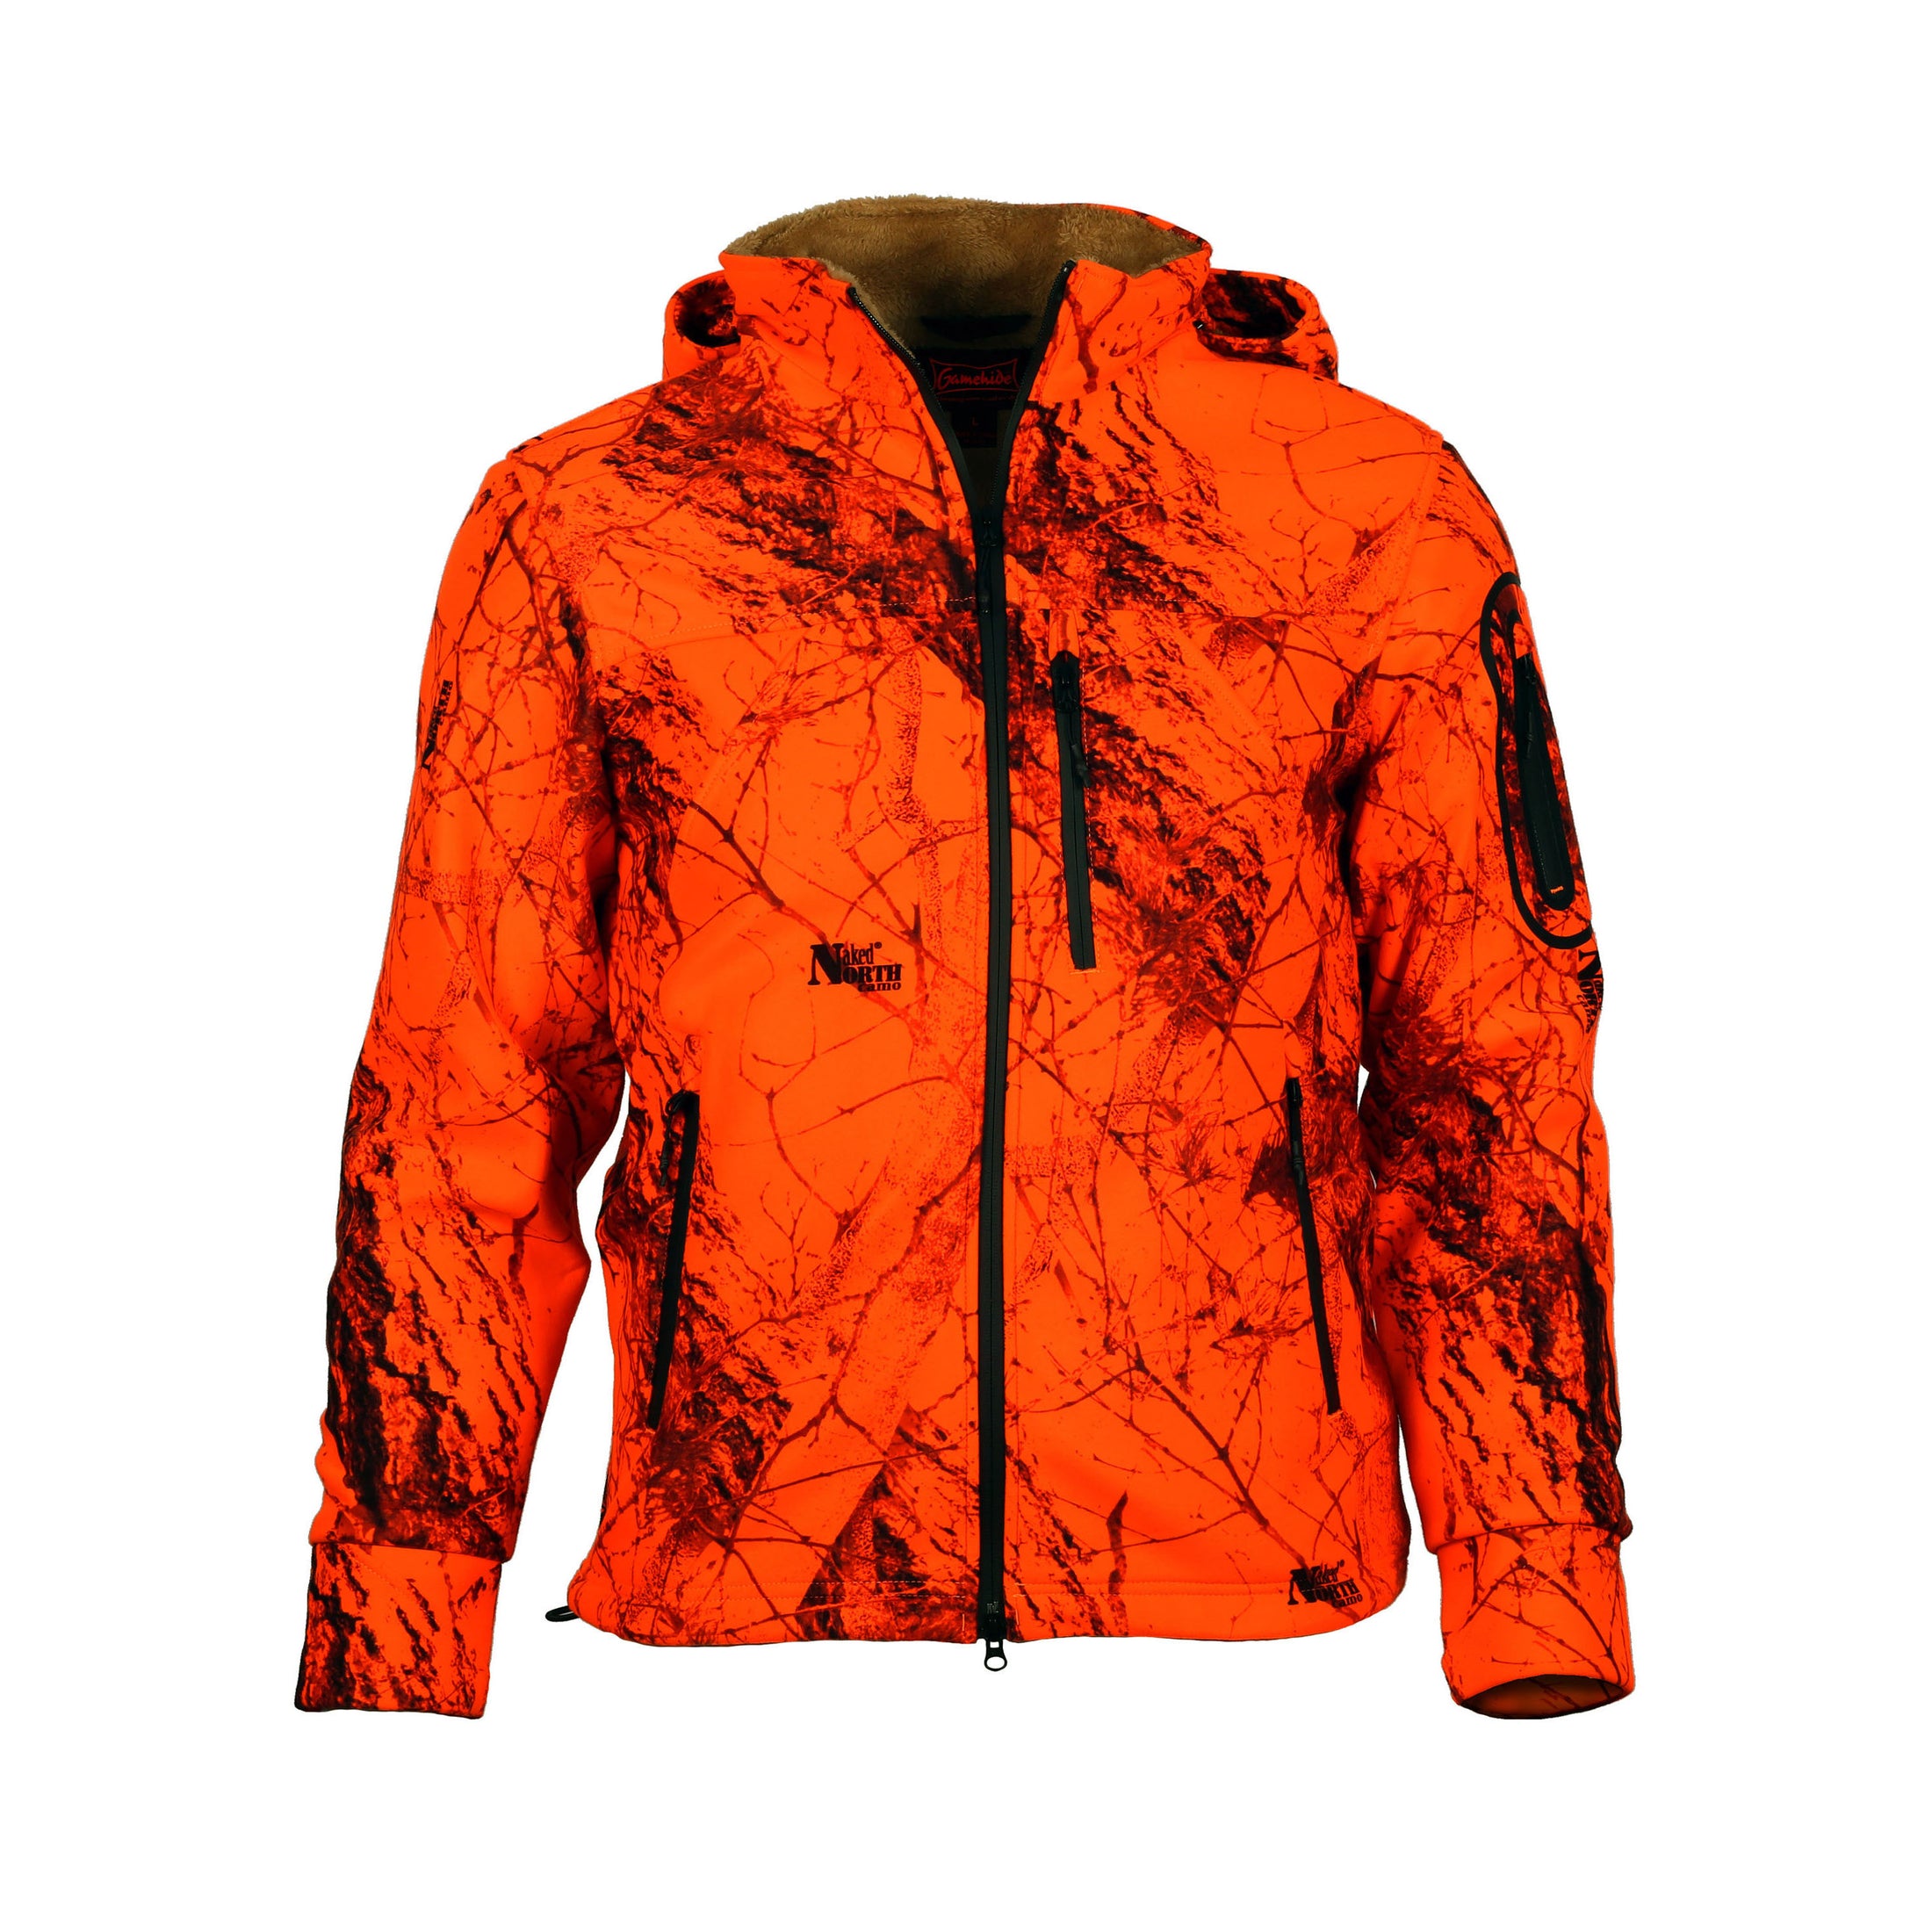 gamehide whitetail jacket front  view (naked north blaze orange camo)